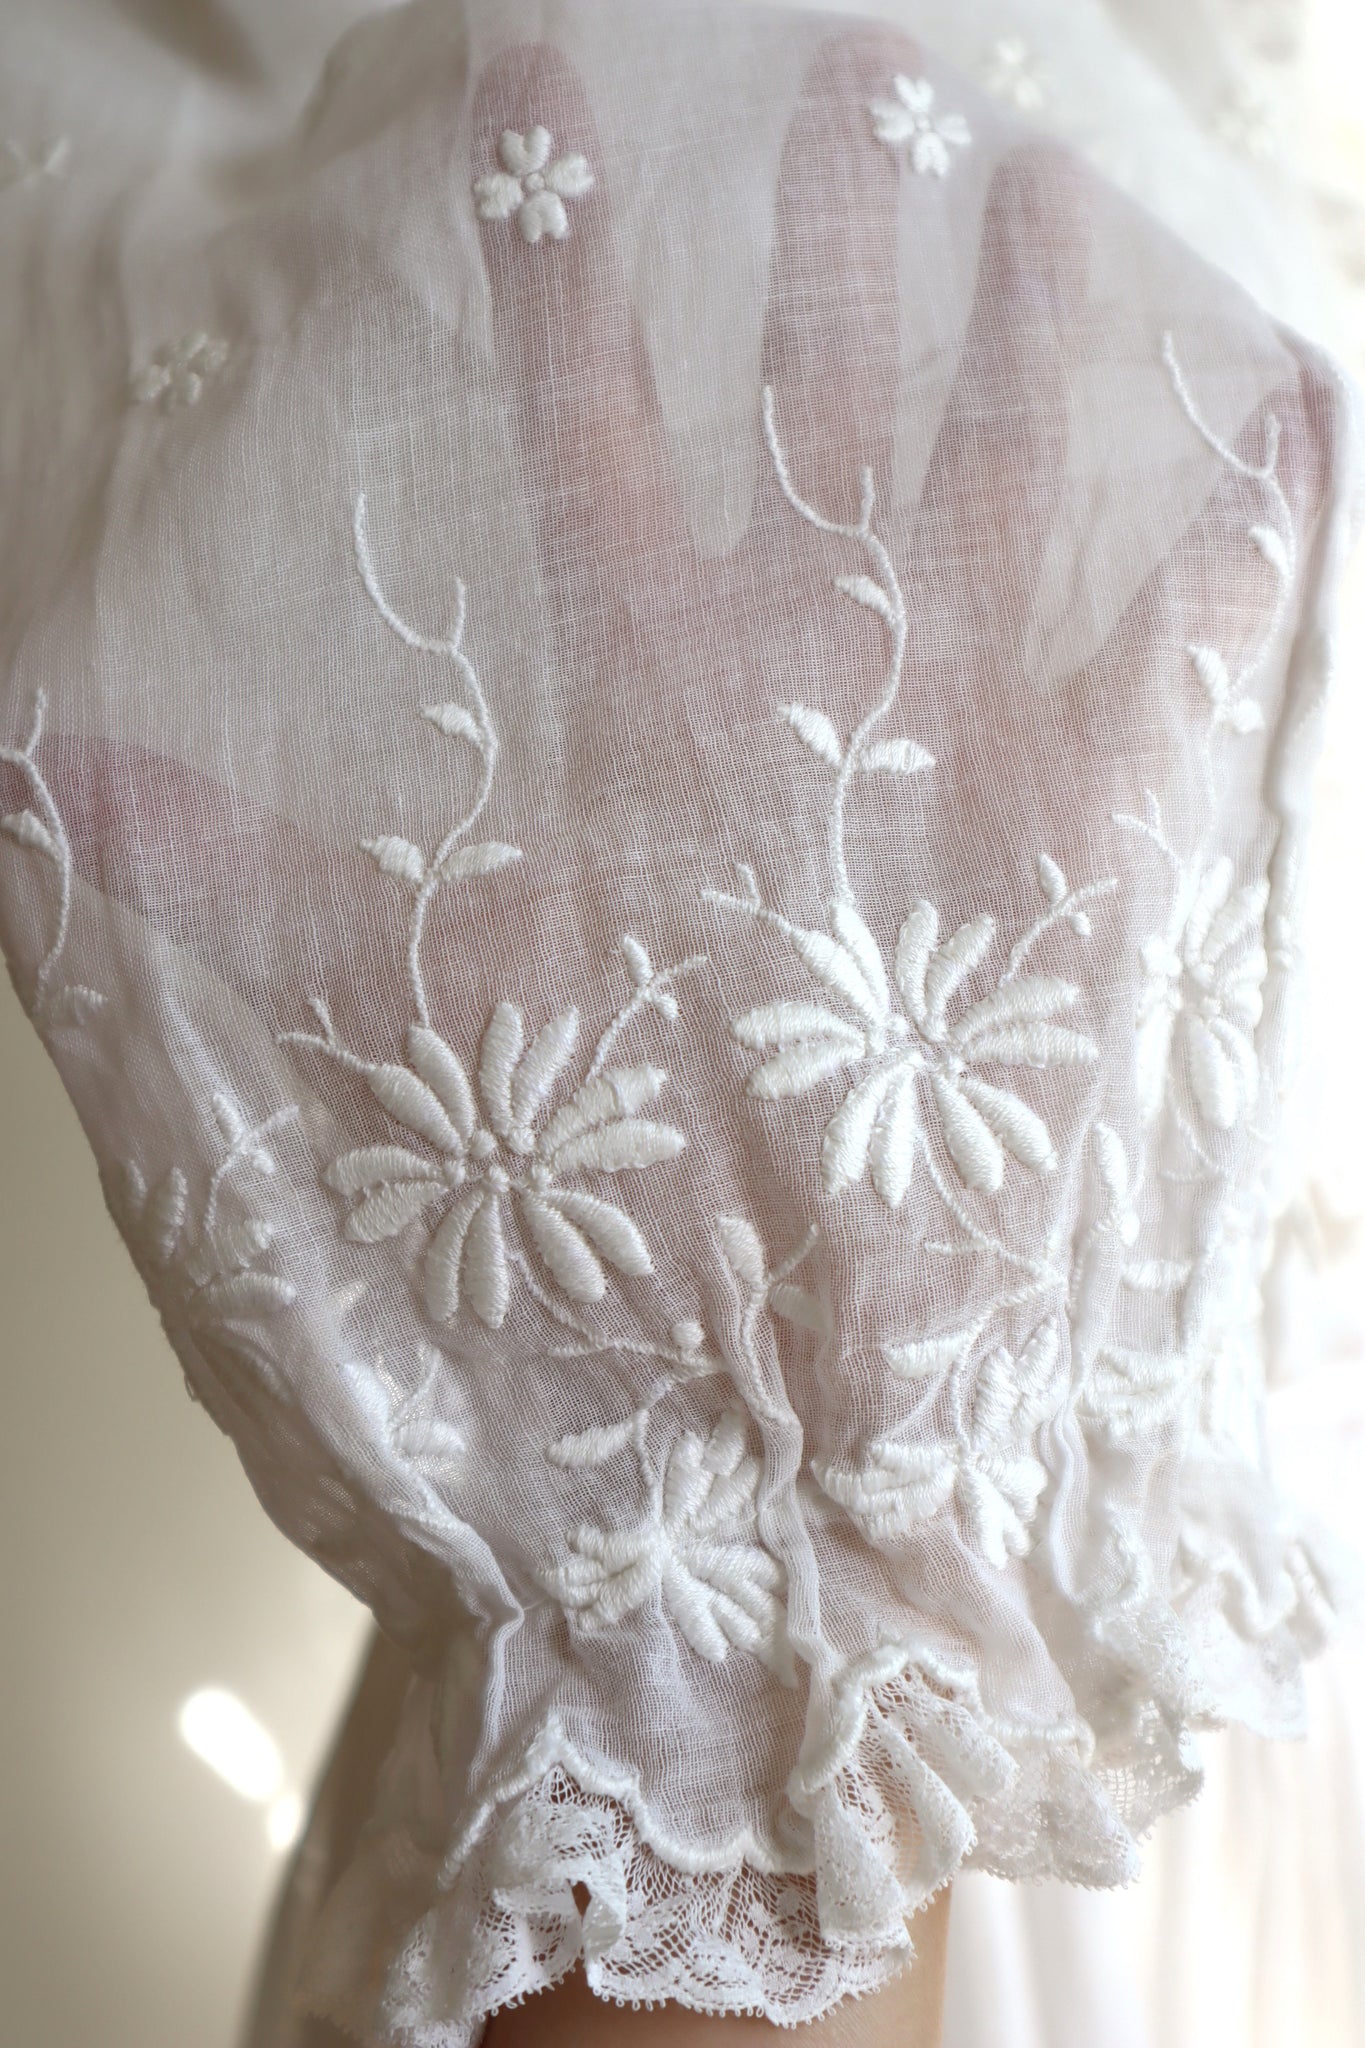 1910s Muslin Cotton Dress Vest Set